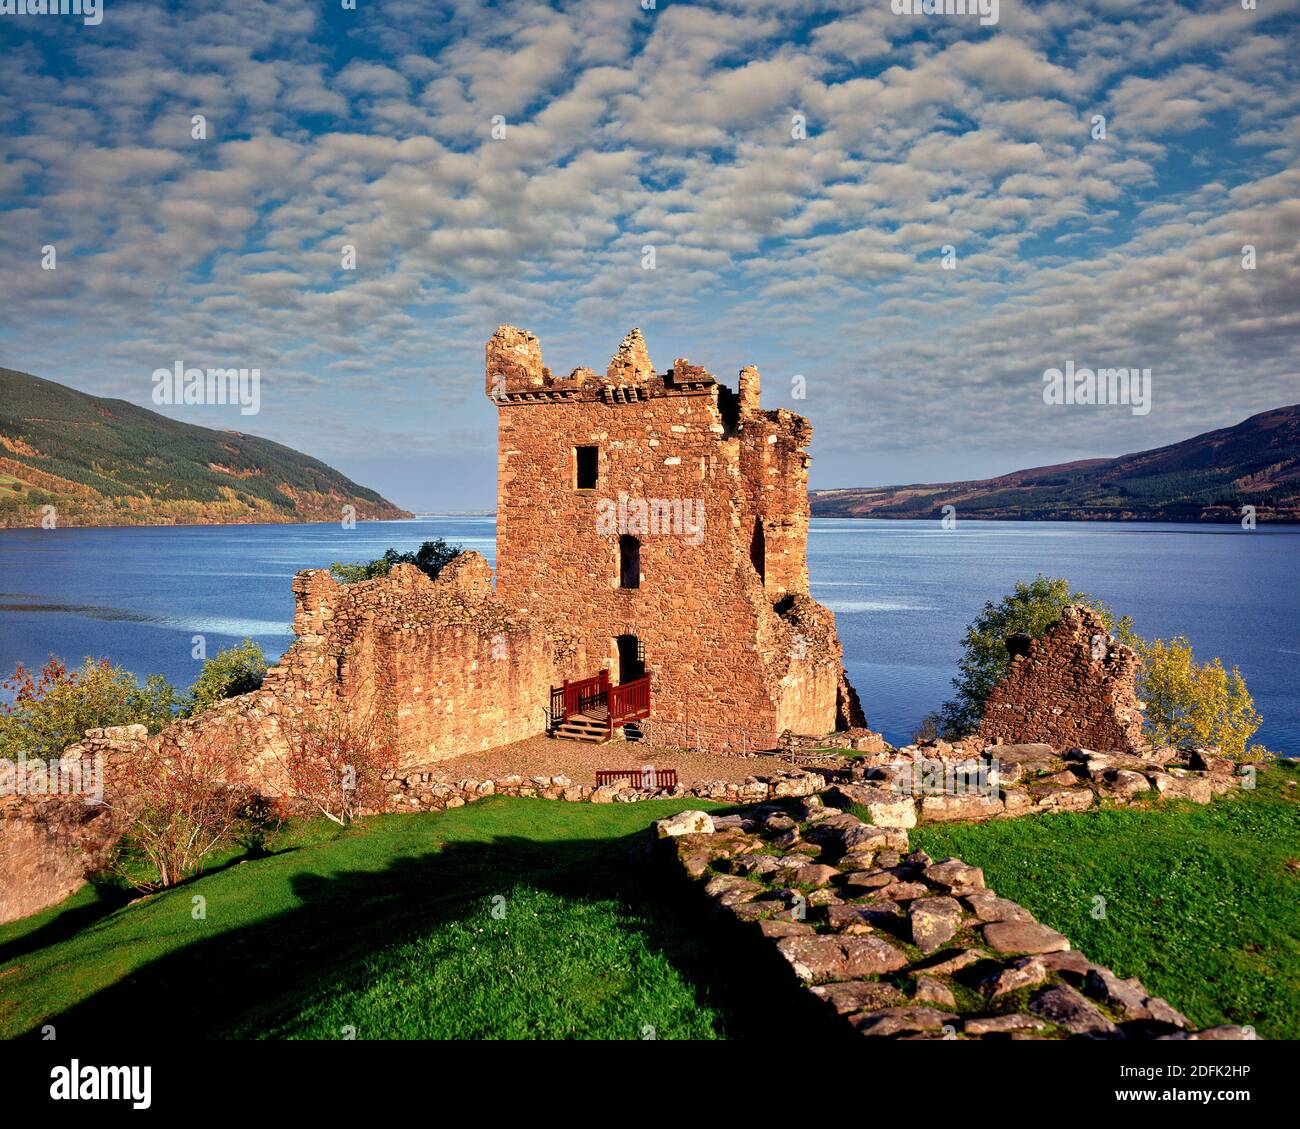 GB - SCOTLAND: Urquhart Castle overlooking Loch Ness Stock Photo